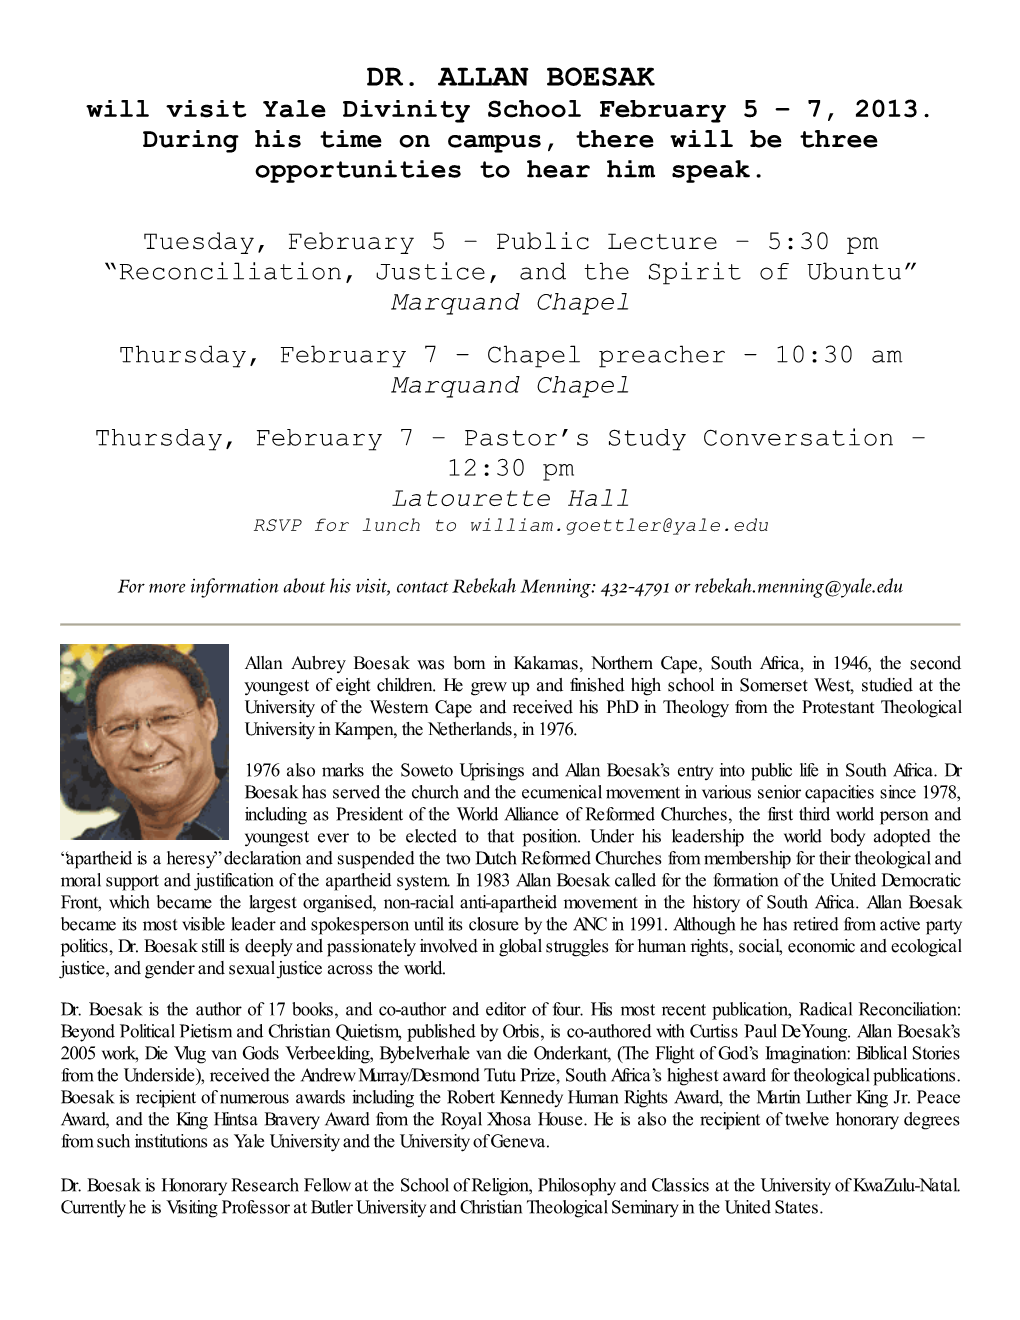 DR. ALLAN BOESAK Will Visit Yale Divinity School February 5 – 7, 2013